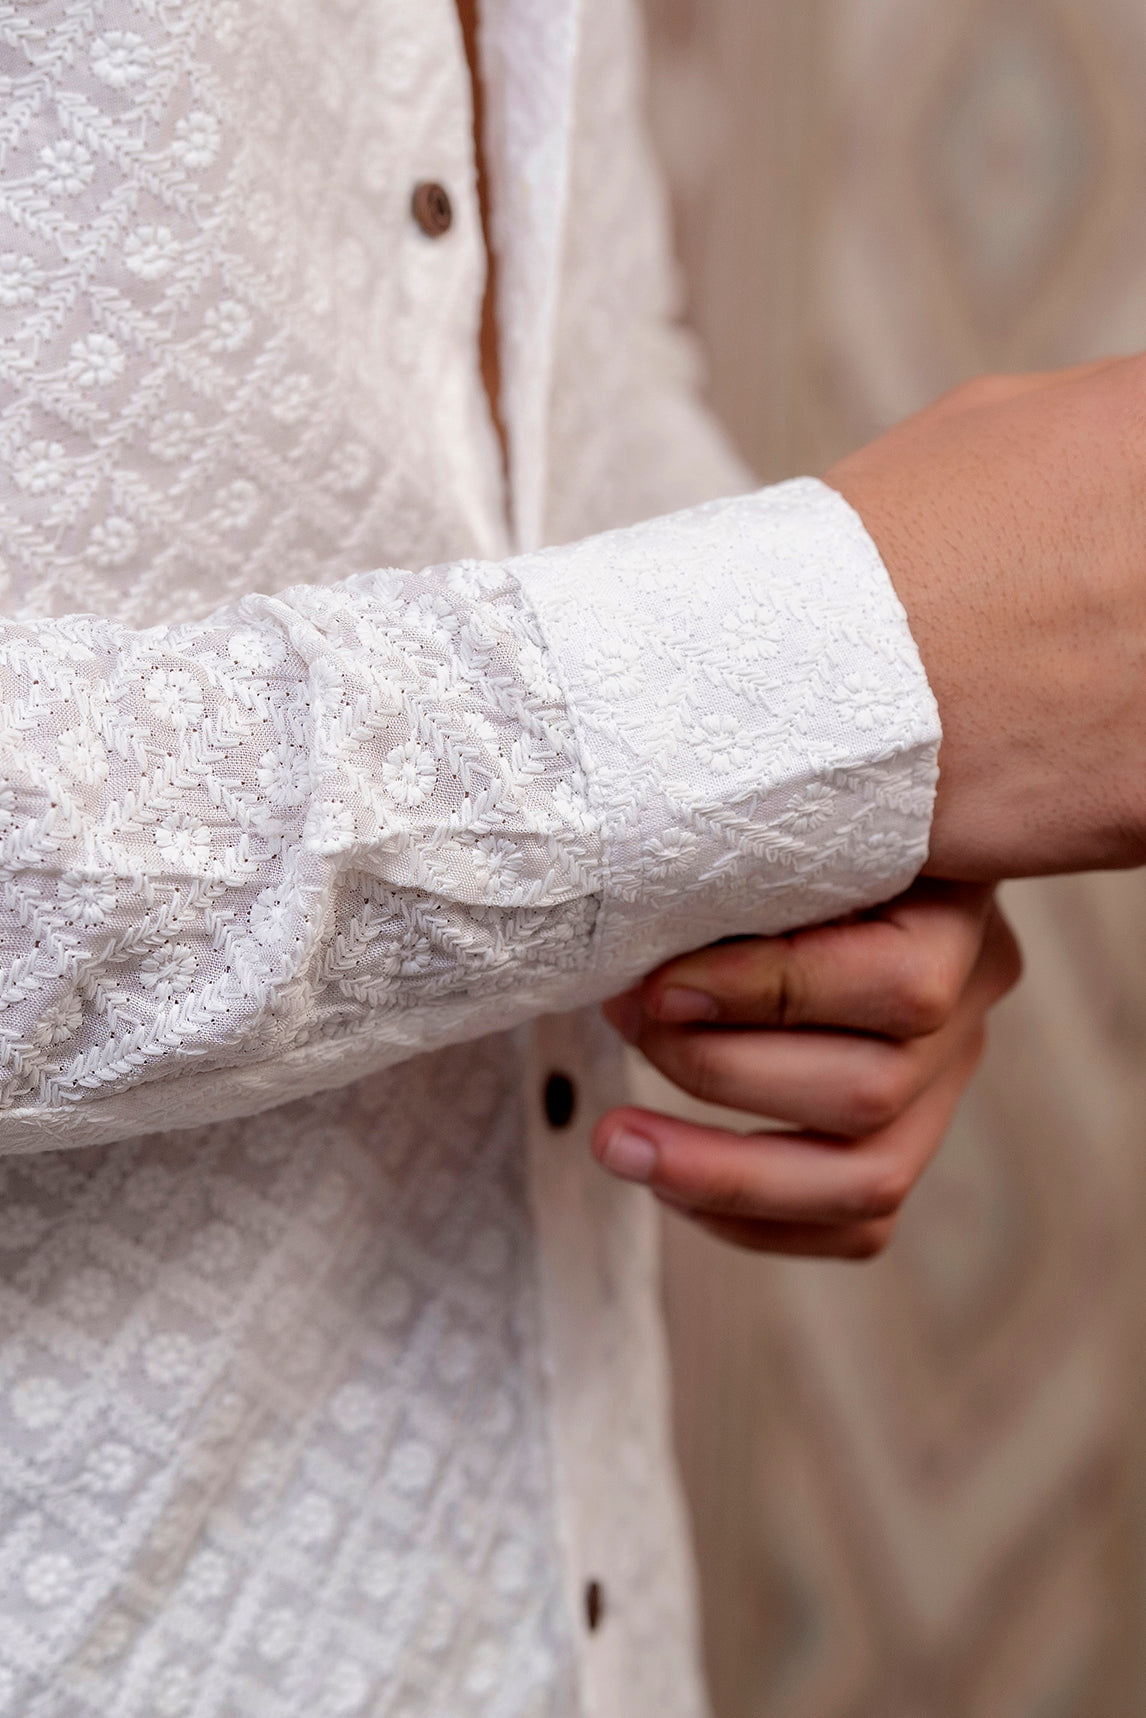 Firangi Yarn Super Soft Full Sleeves Chikankari Schiffli Embroided Men's Shirt- White (Choose one size bigger)